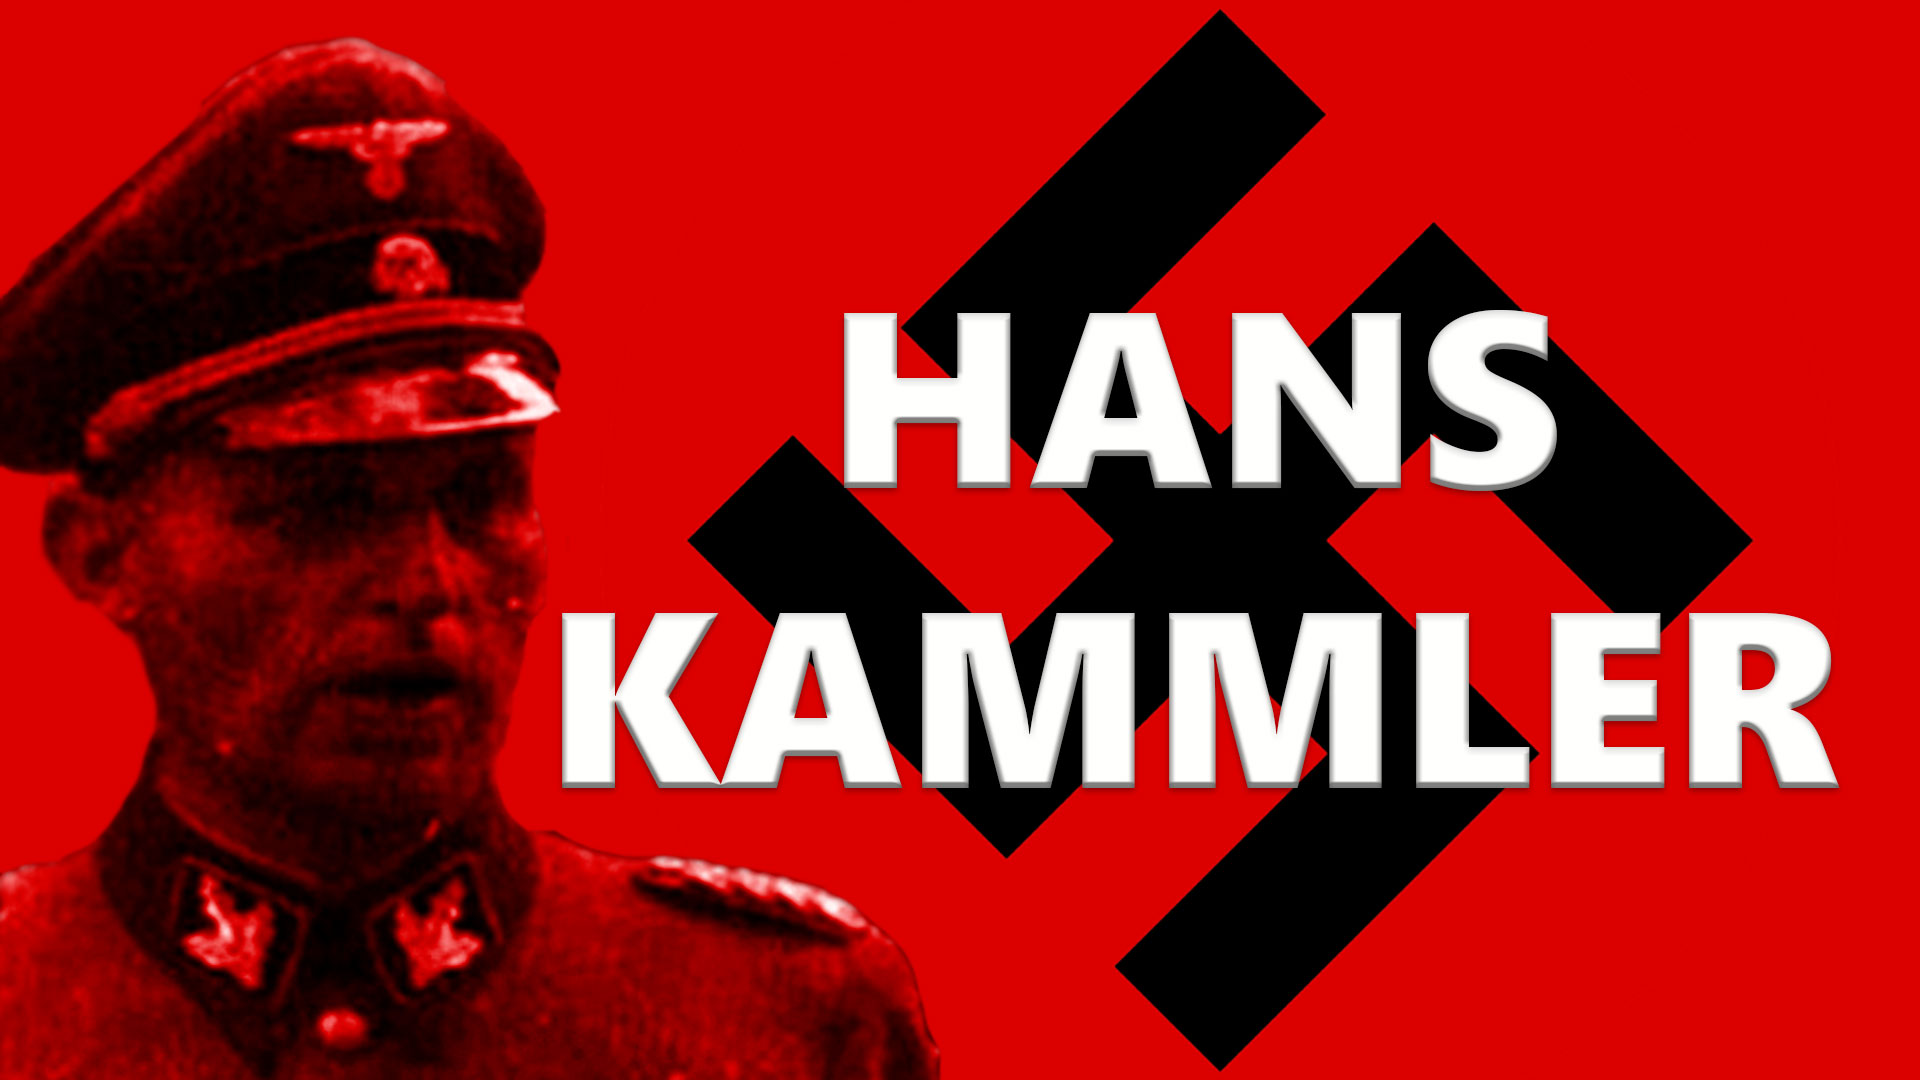 HANS KAMMLER, INGENIERO DEL HORROR NAZI